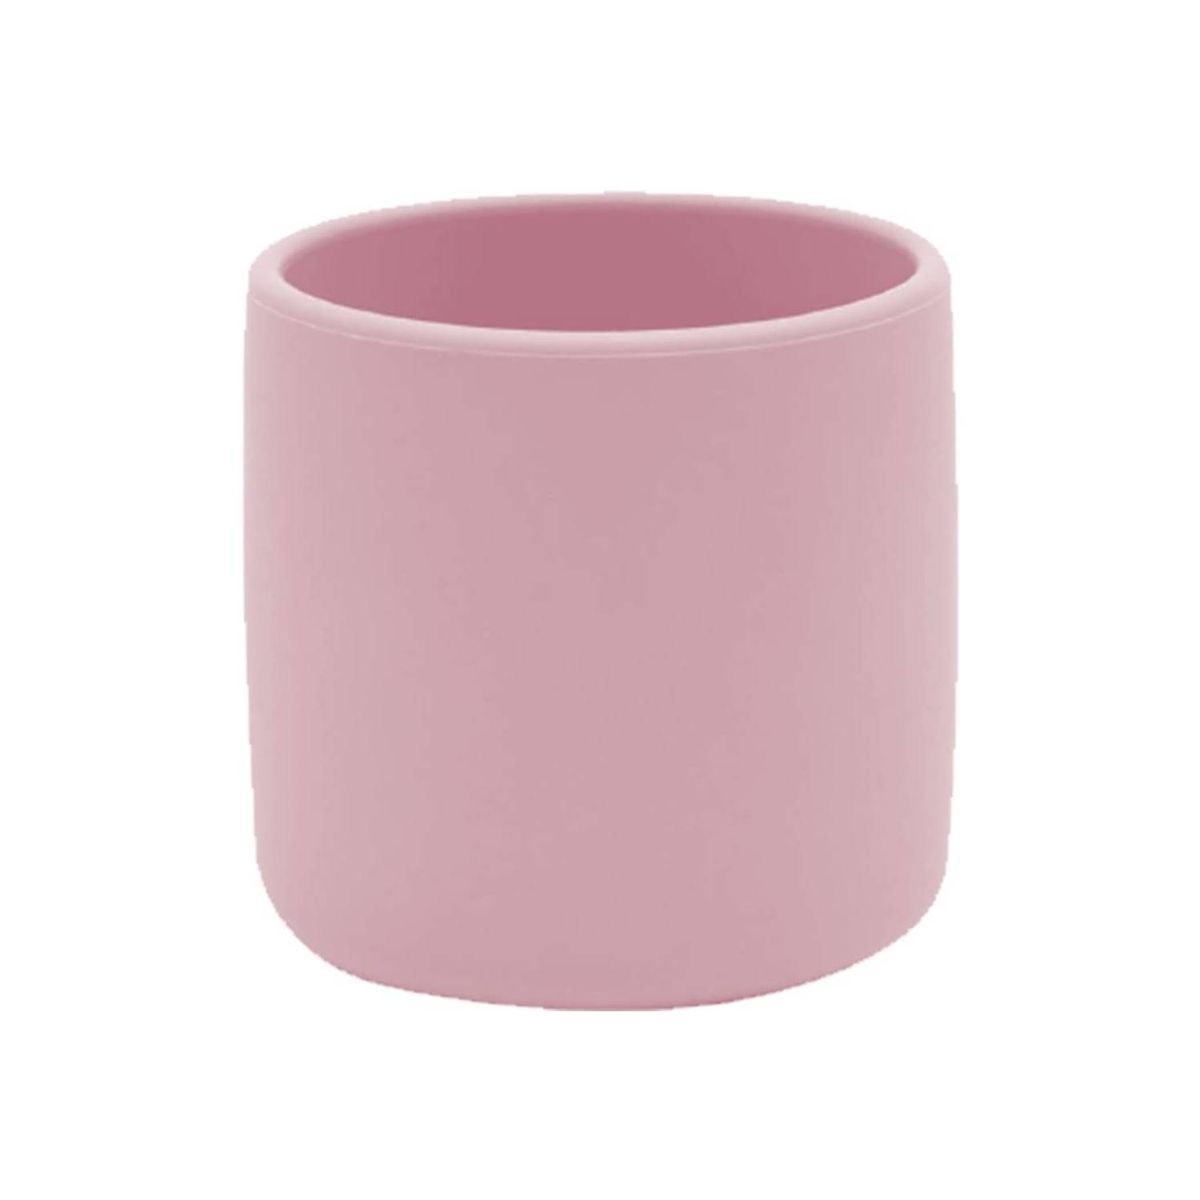 Minikoioi silikonska čaša Minicup pink 